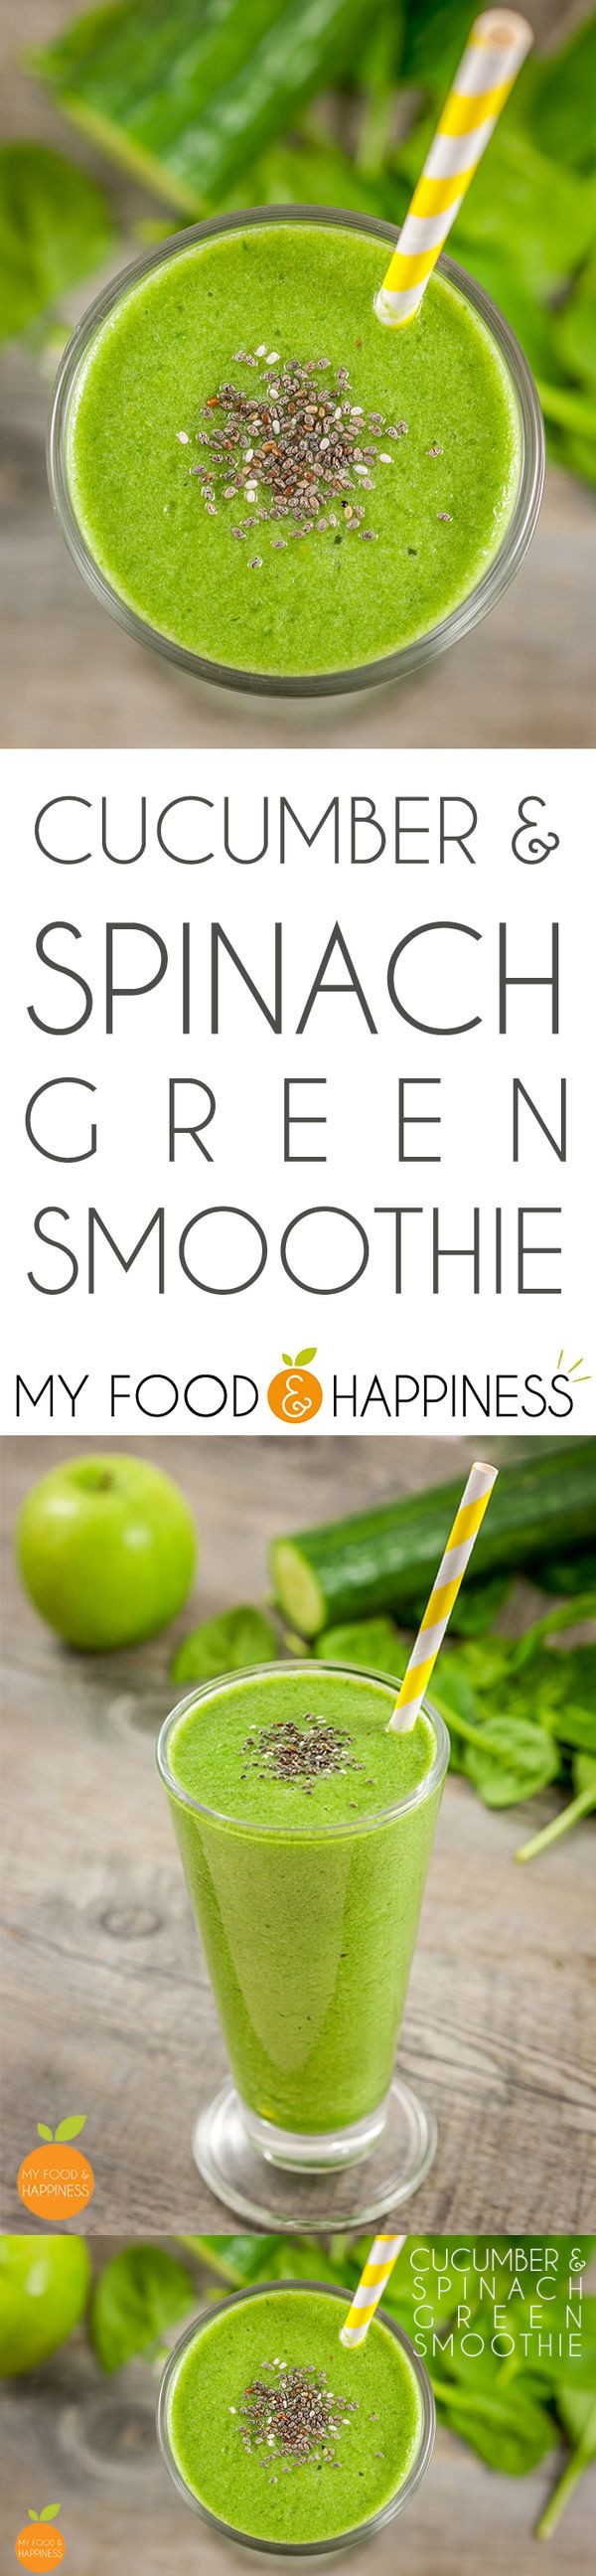 Cucumber & Spinach green smoothie